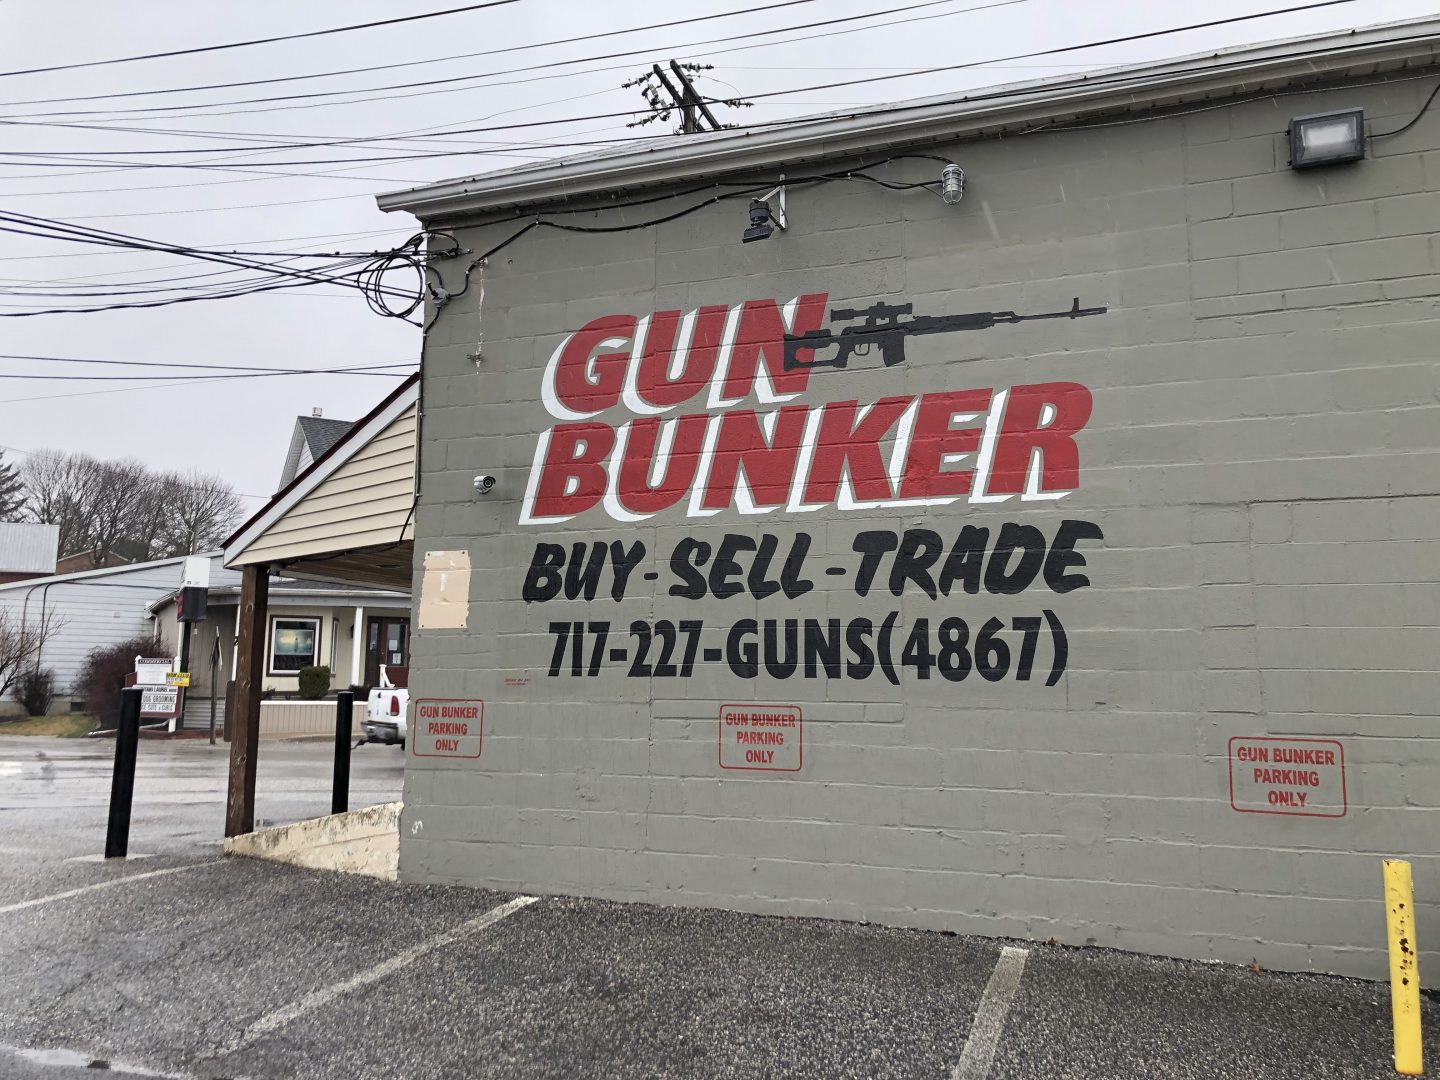 Gun Bunker in Shrewsbury, York County on March 23, 2020.